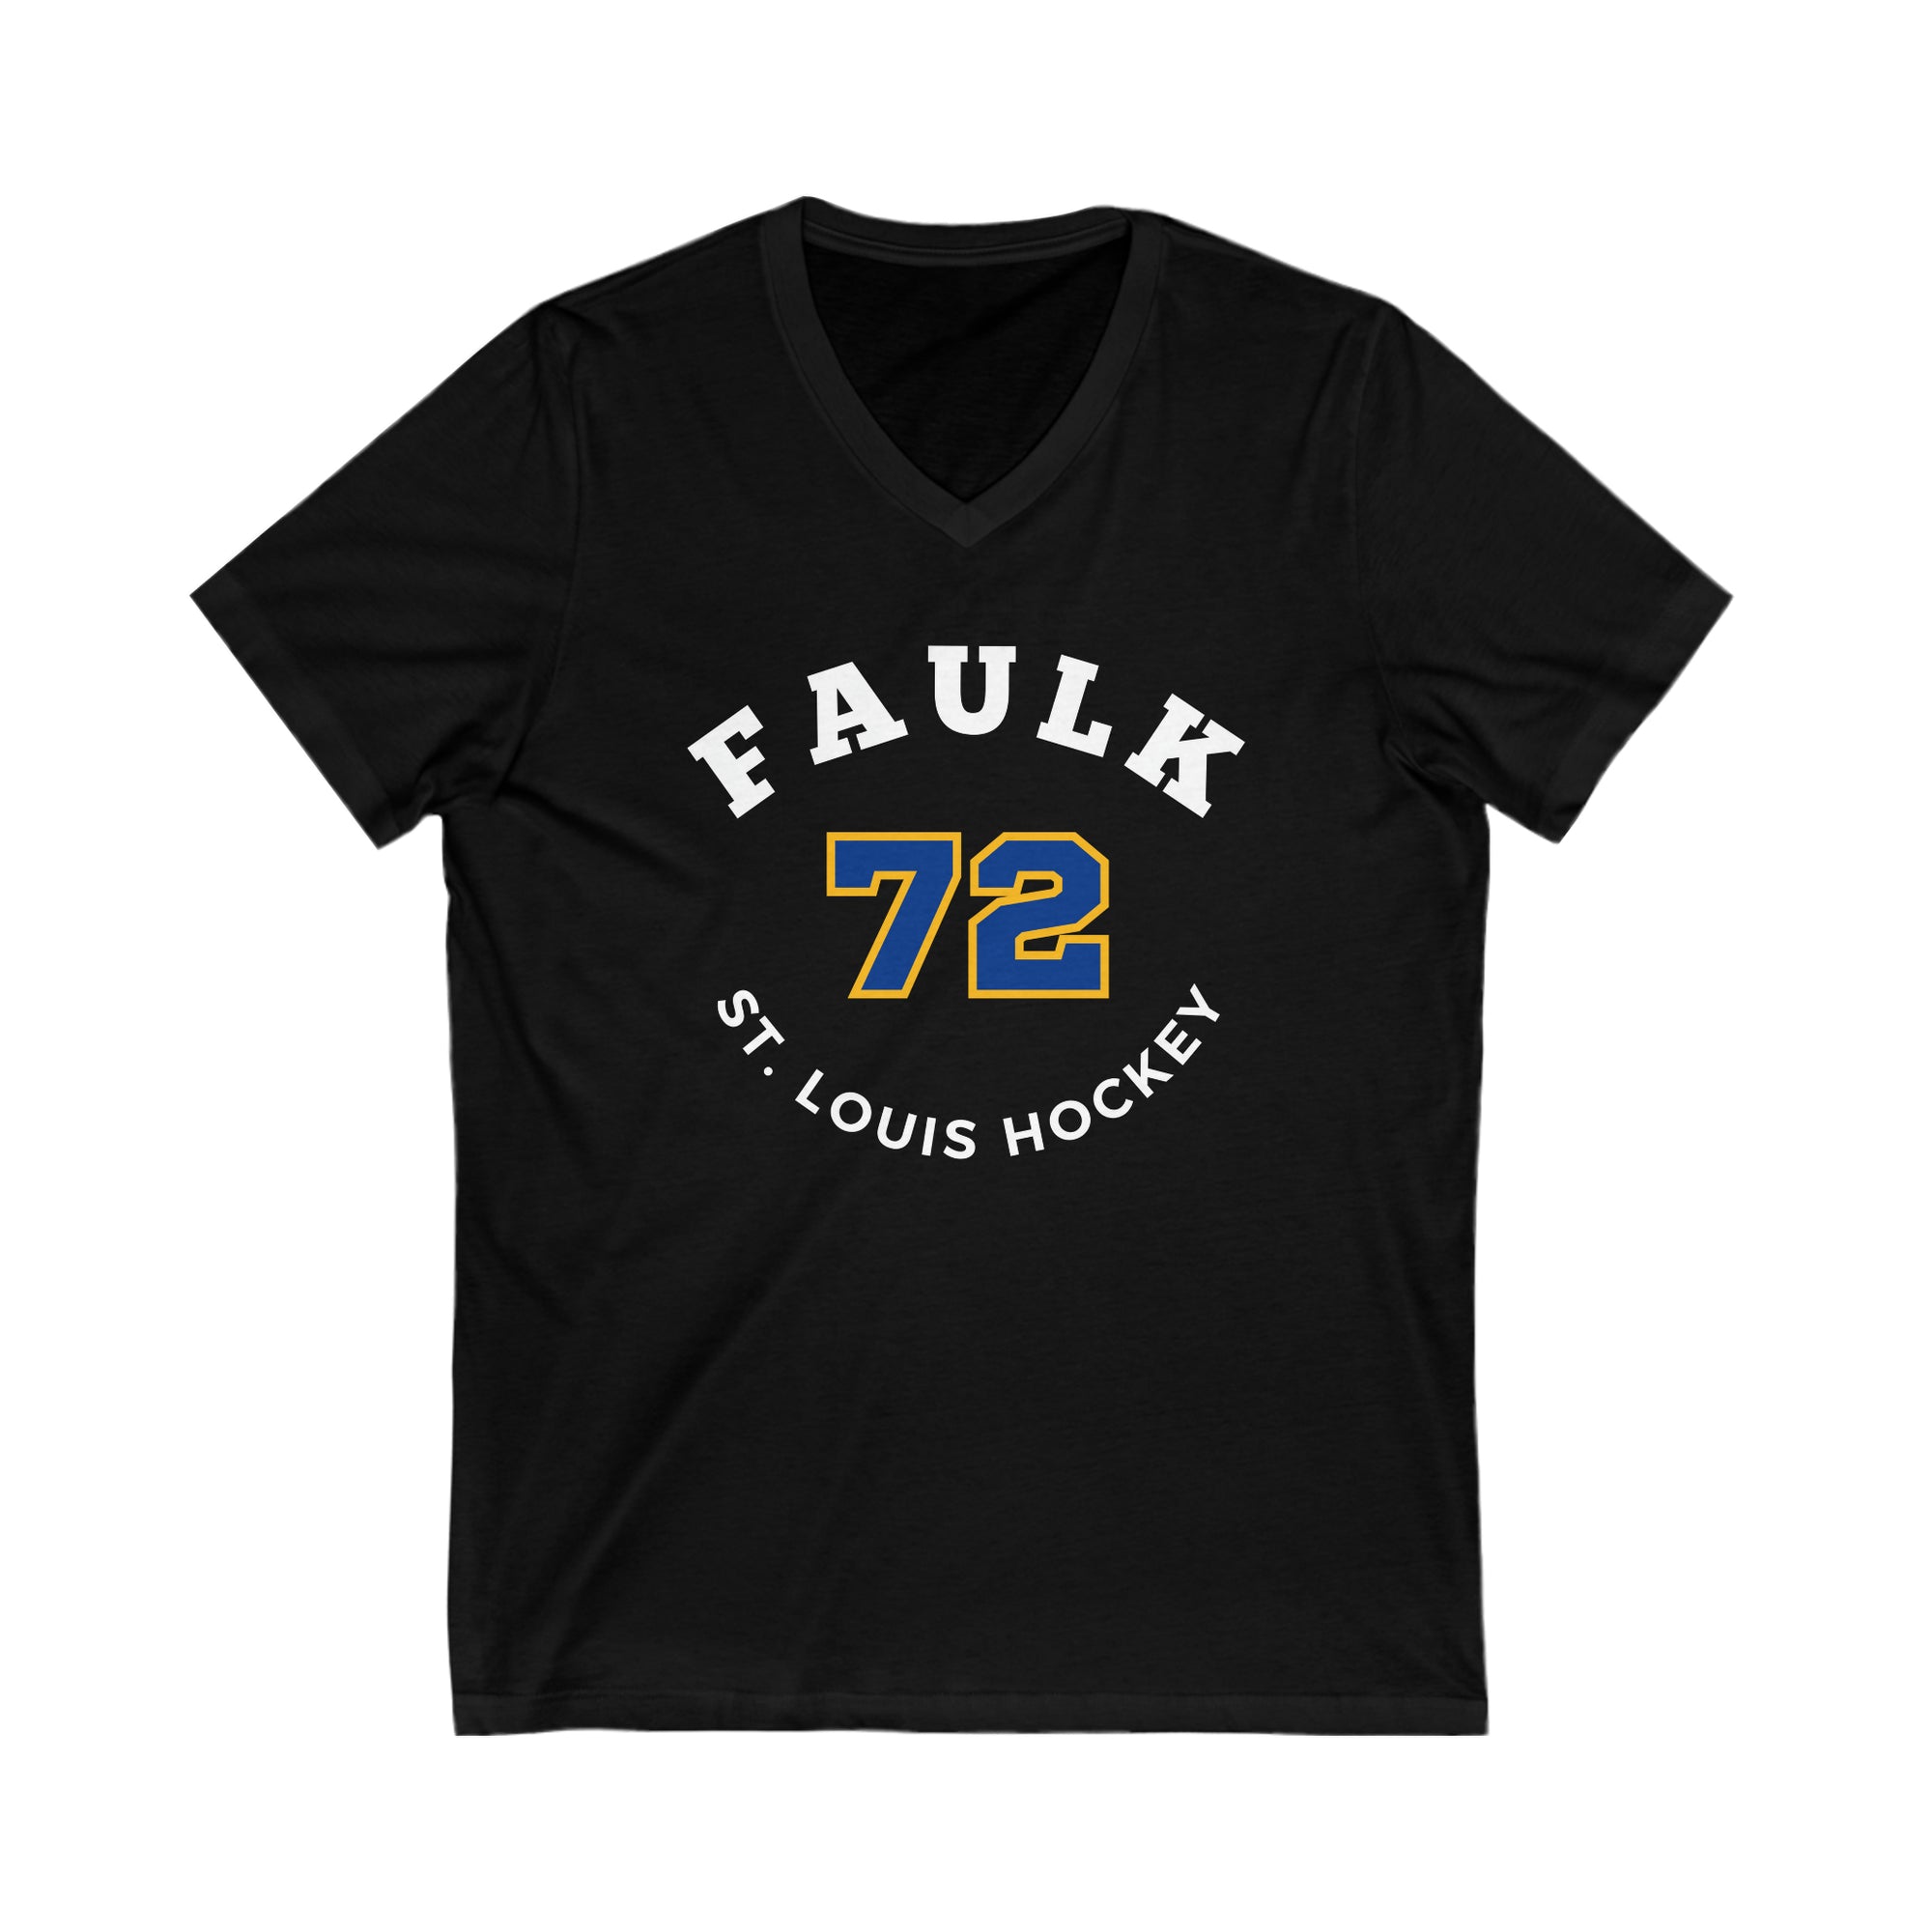 Faulk 72 St. Louis Hockey Number Arch Design Unisex V-Neck Tee